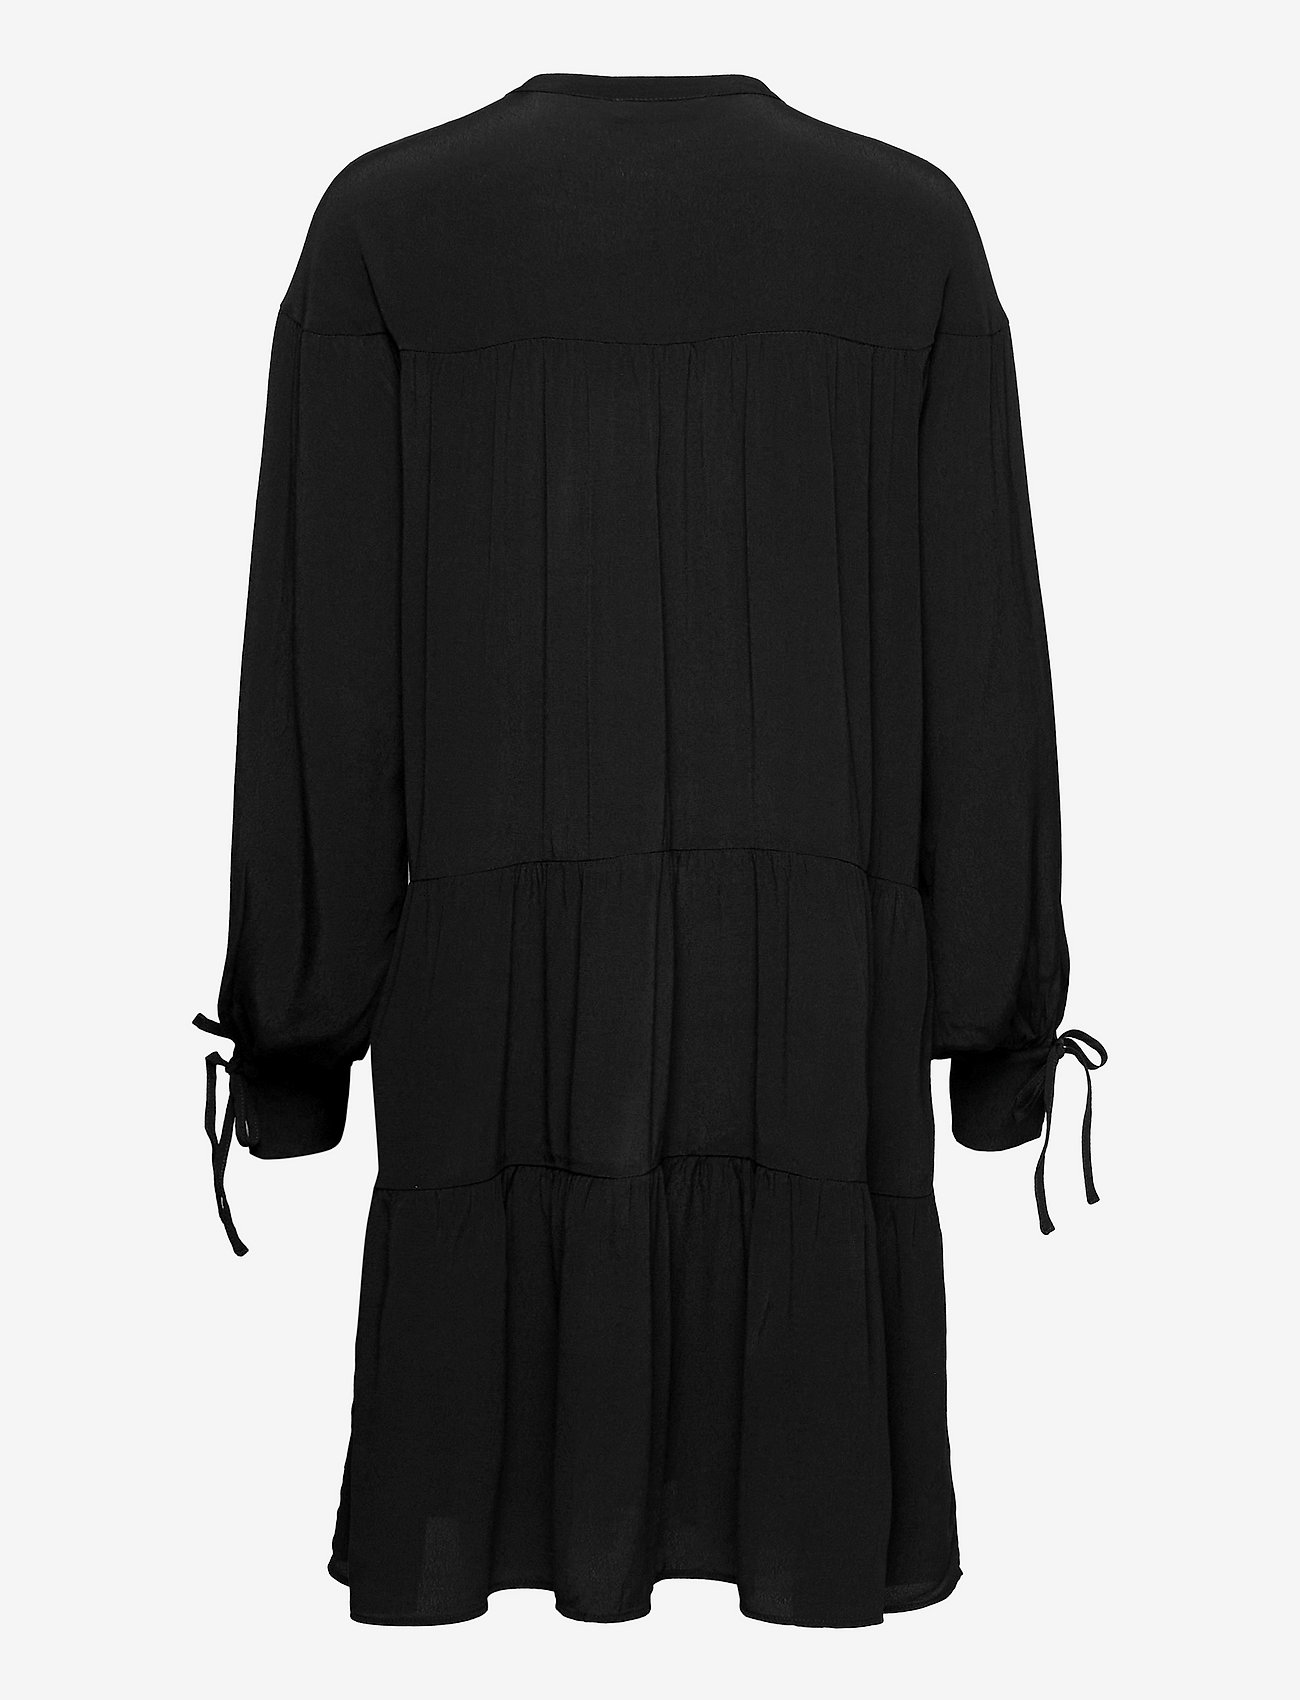 Modström - Menna dress - midi kjoler - black - 1